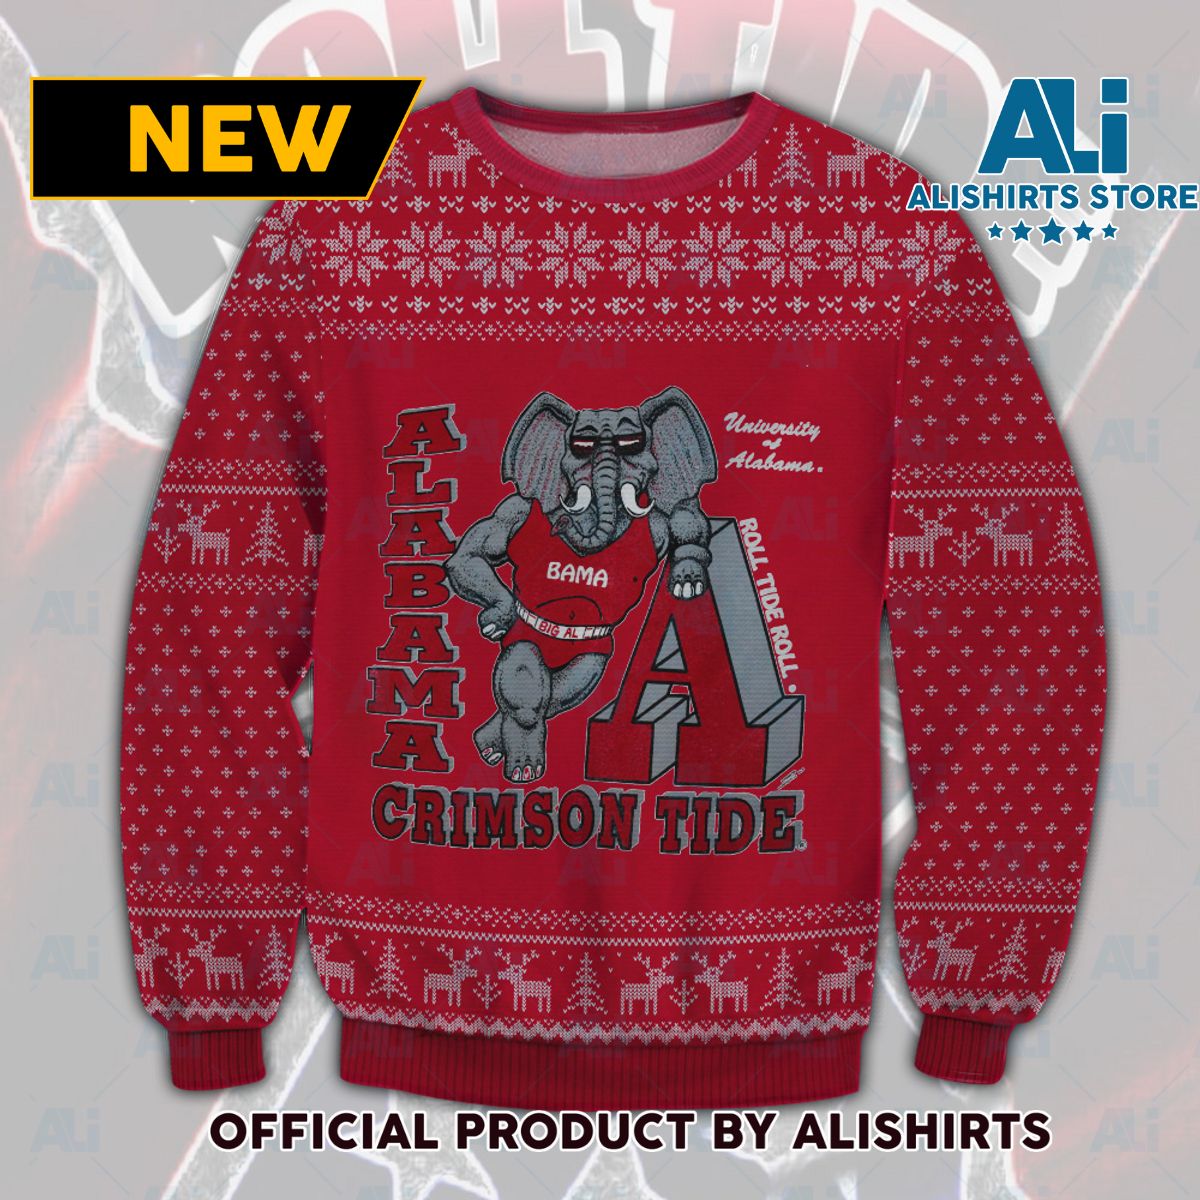 Alabama Crimson Tide Ugly Christmas Sweater